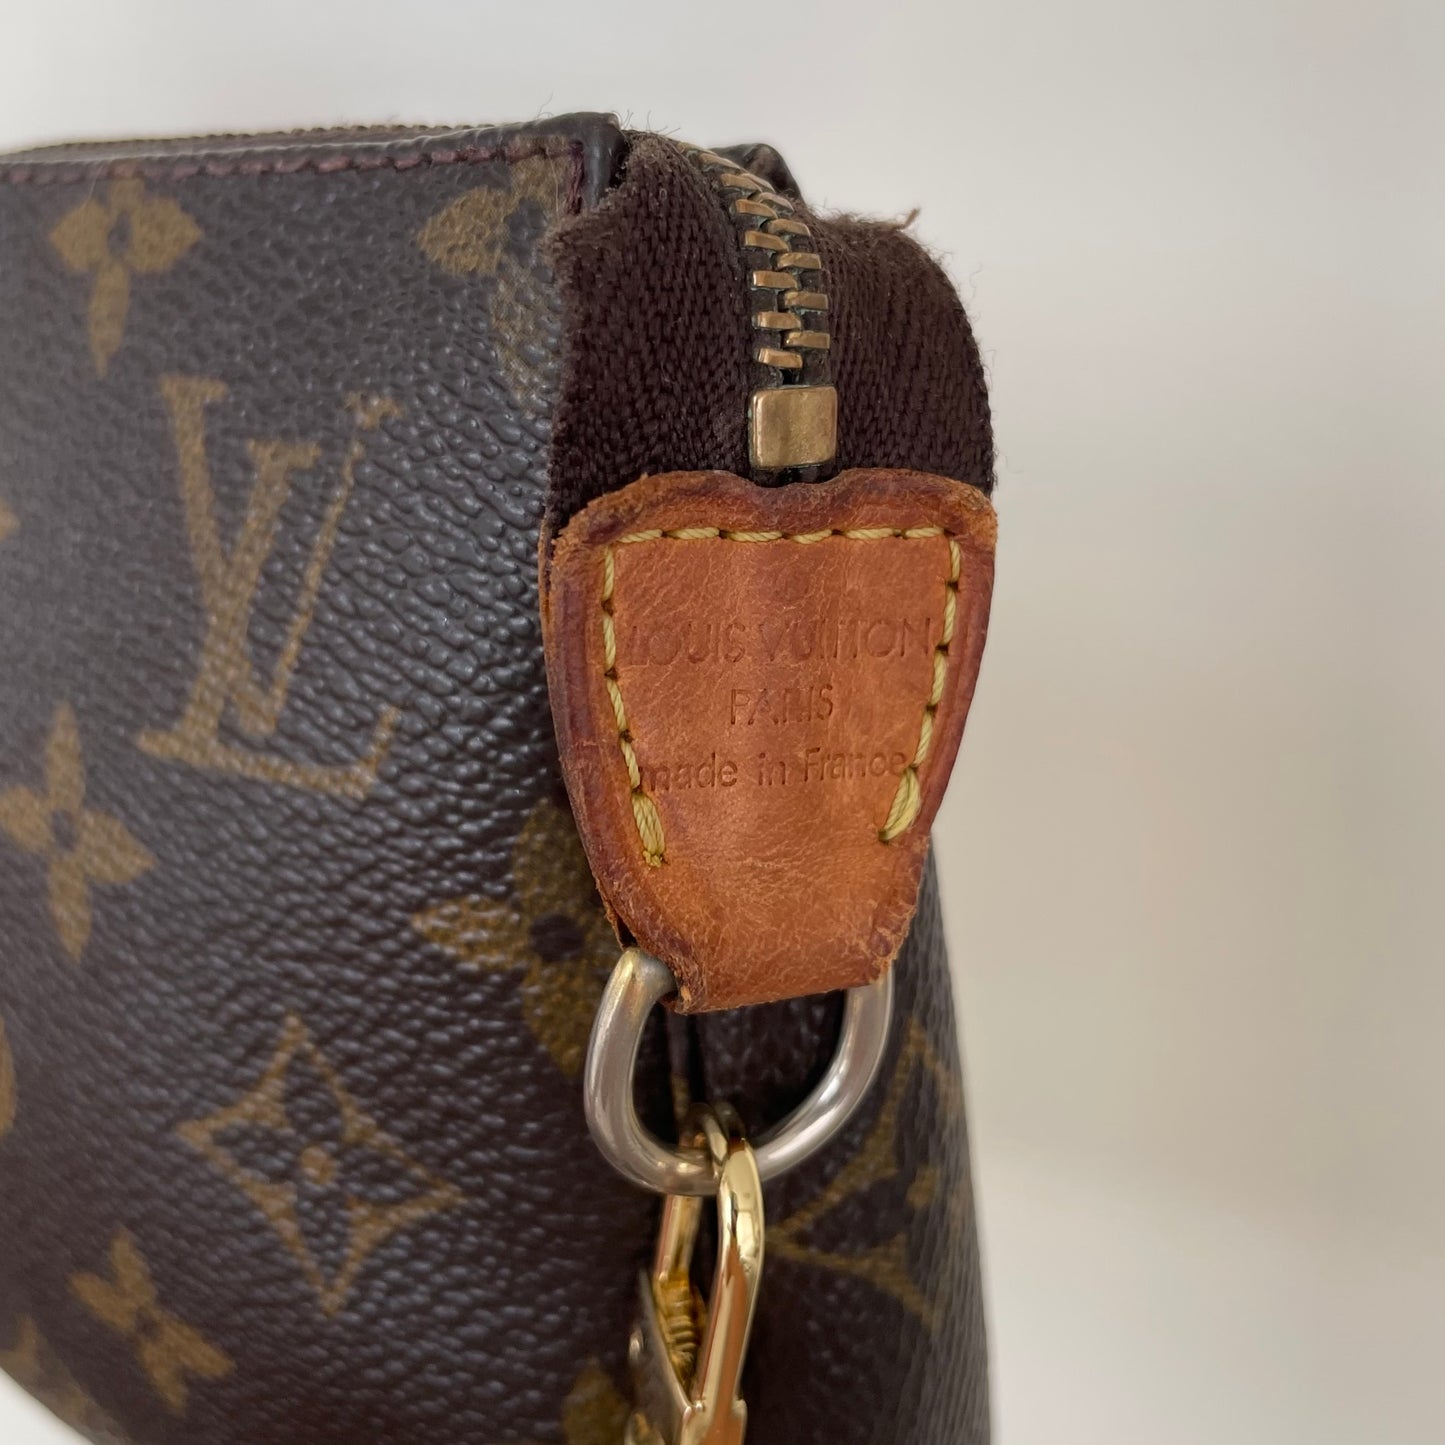 Louis Vuitton Accessories Pouch Sac Shopping Pochette Accessoires with Chain